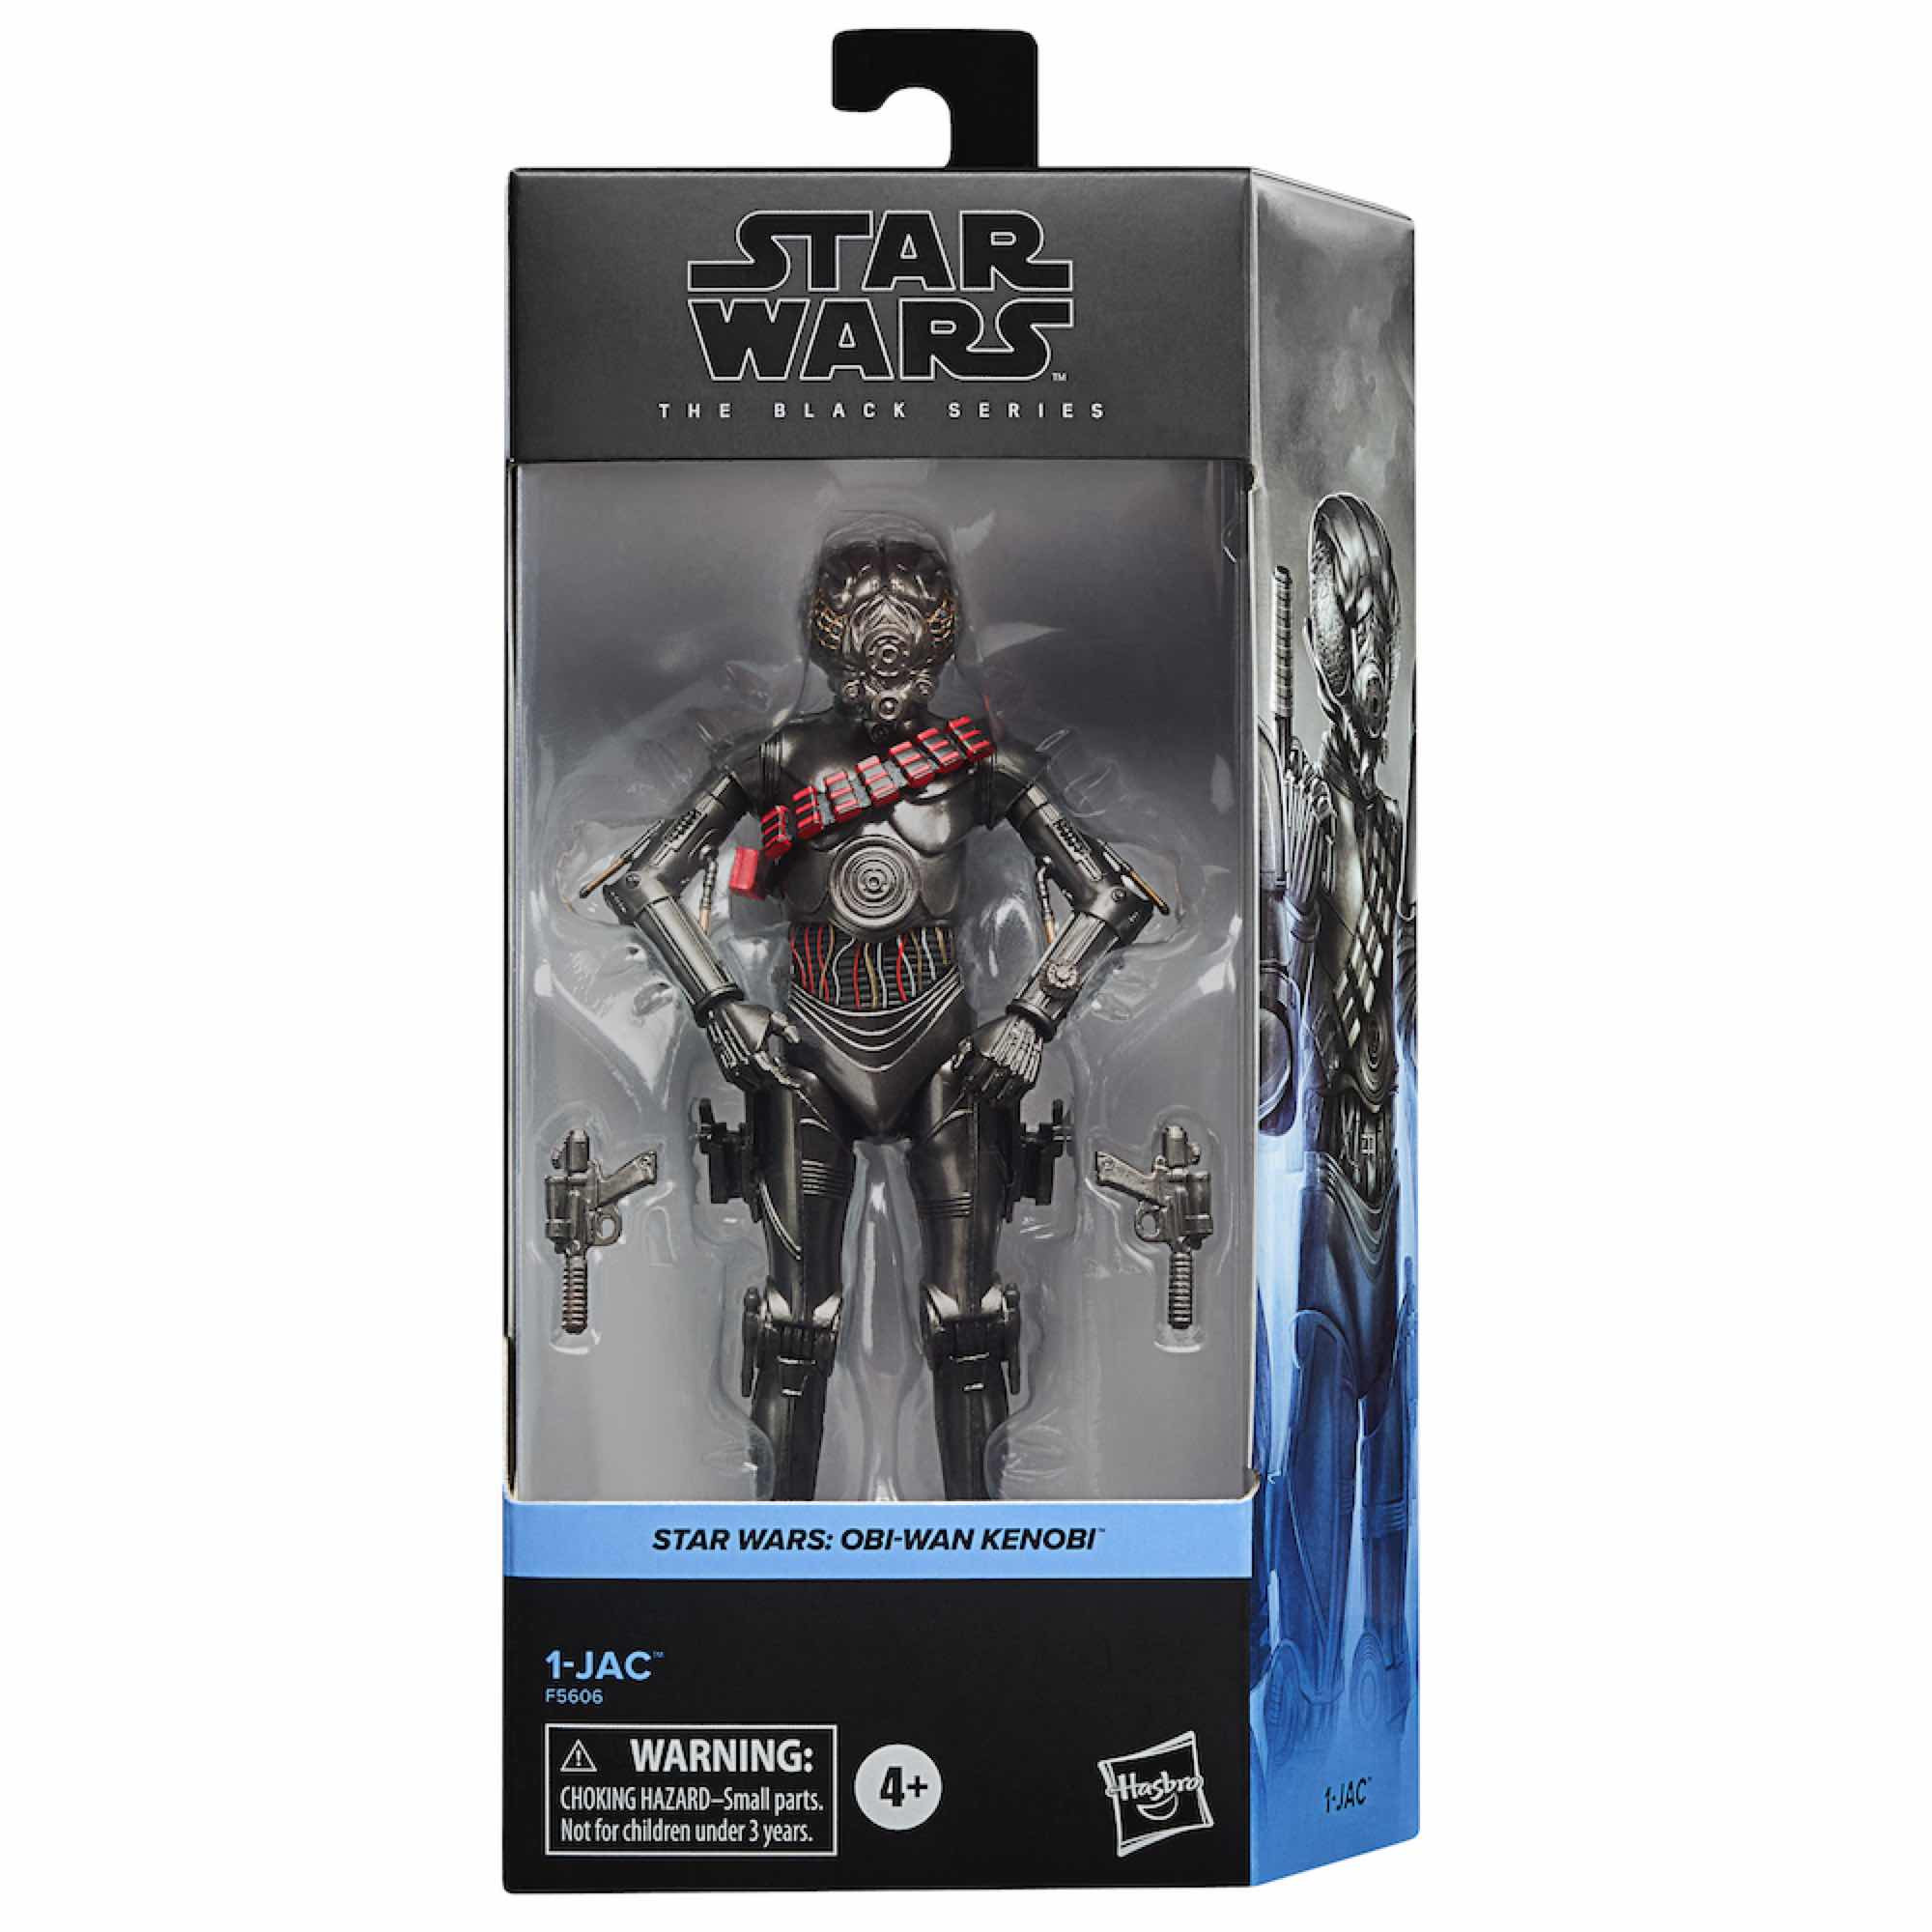 Obi Wan Kenobi 1-JAC Star WarsThe Black Series Figure 15cm HASBRO - 1